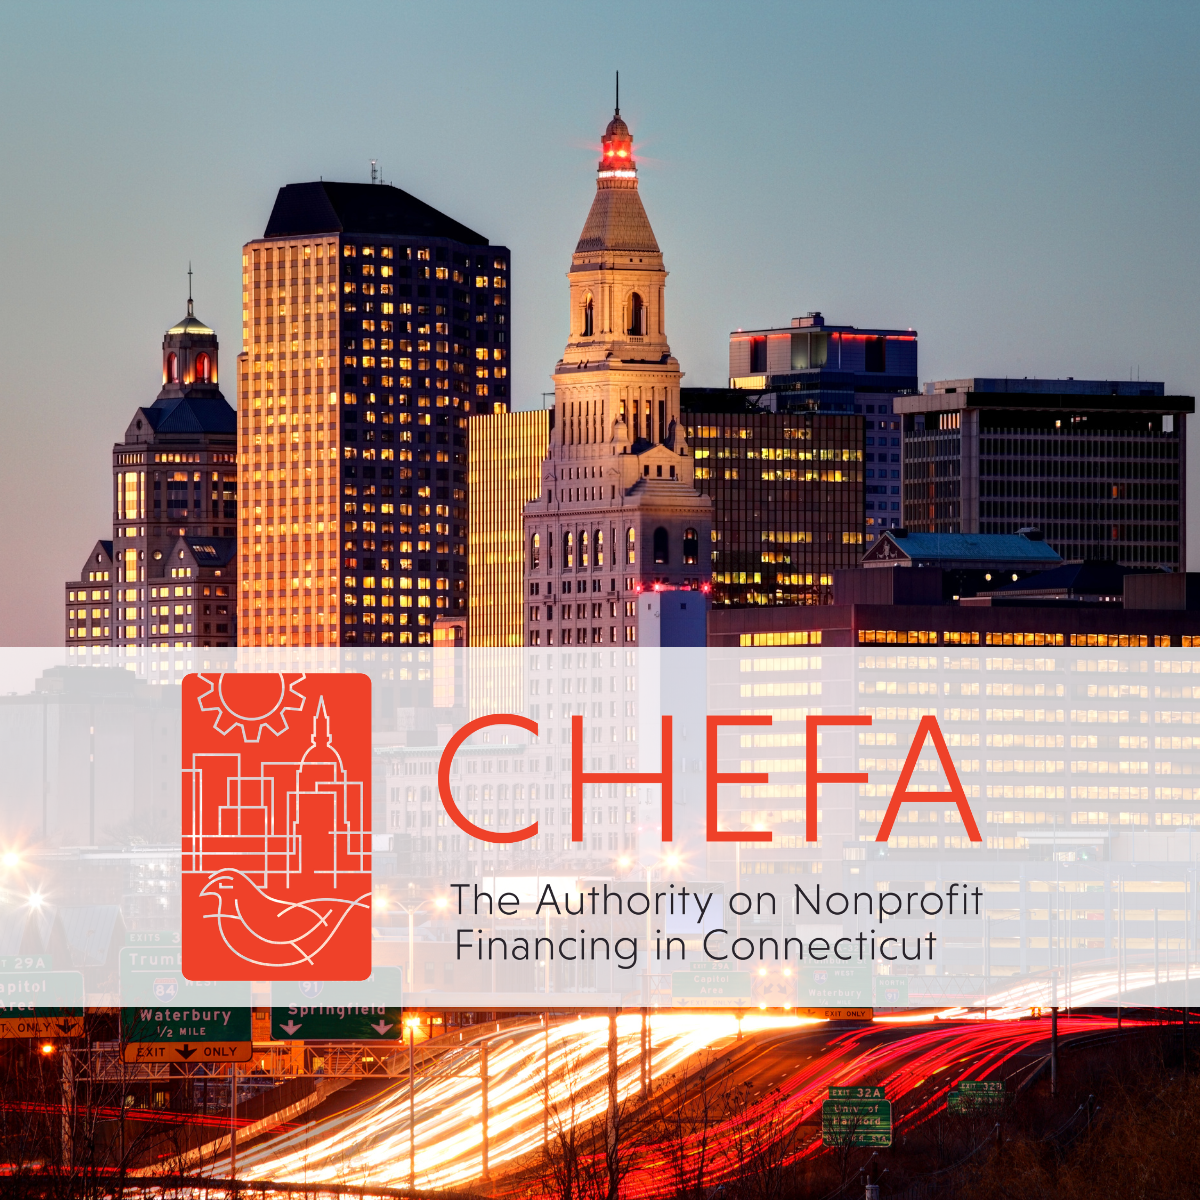 Hartford CT landscape with the CHEFA logo